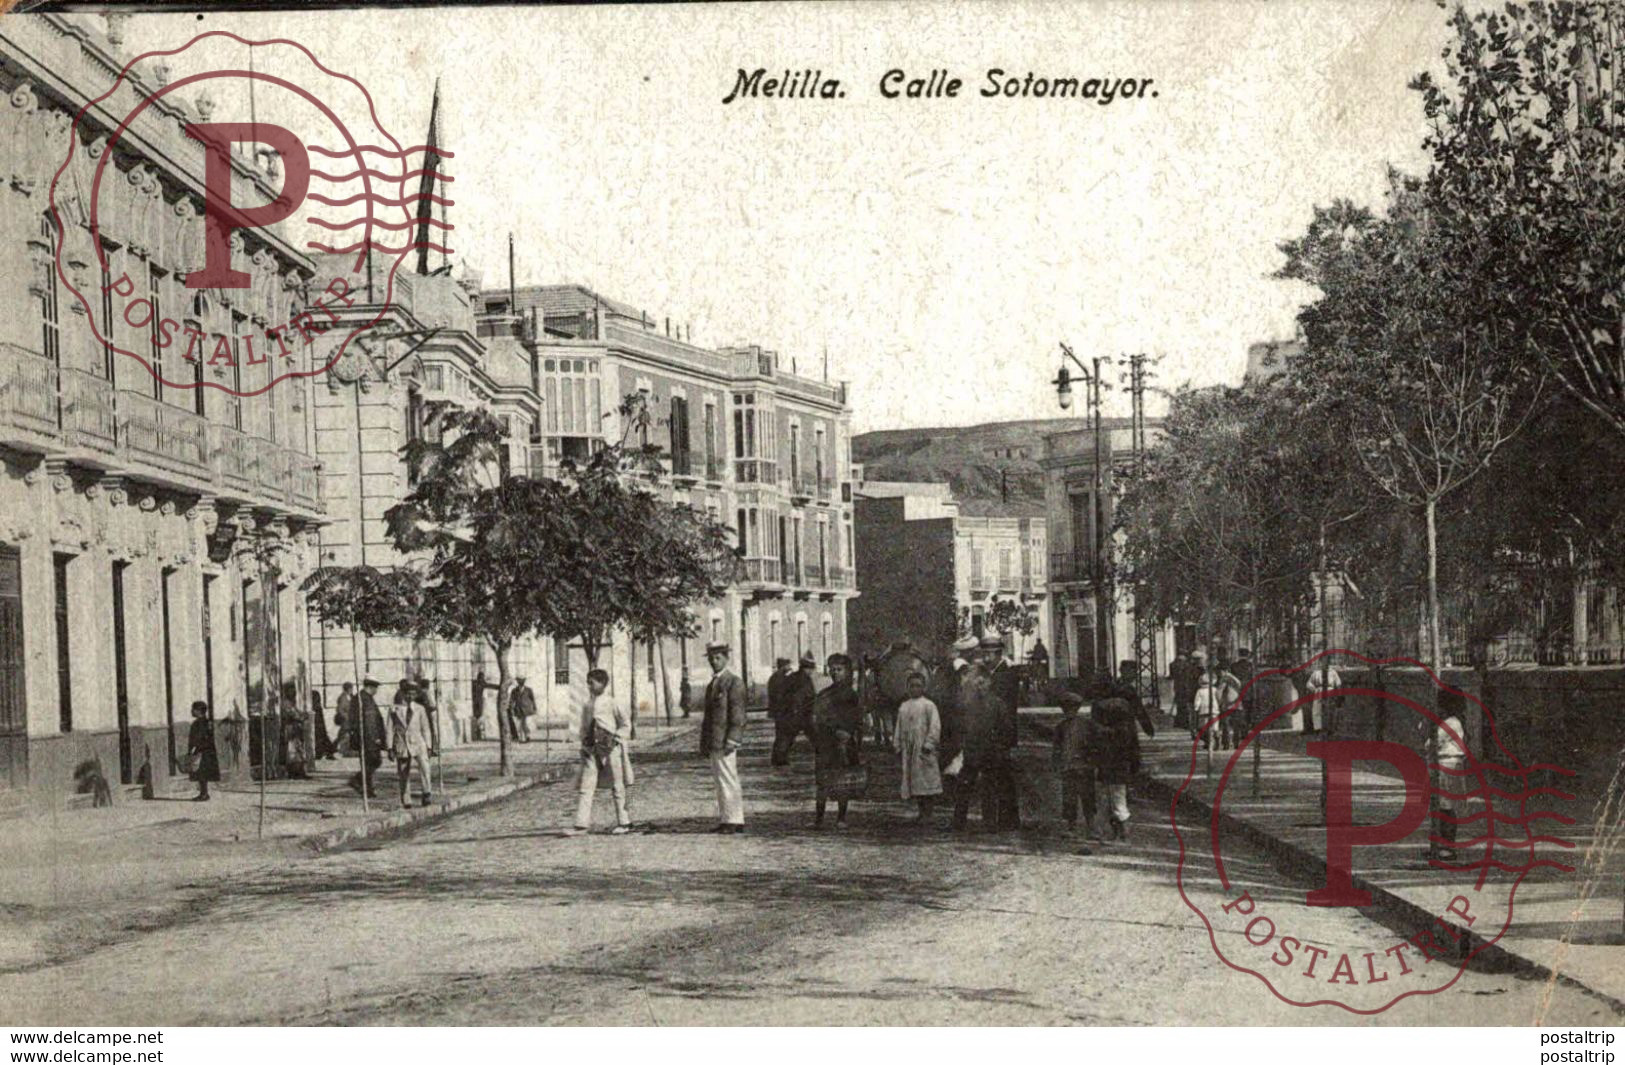 Melilla Calle Sotomayor - Melilla